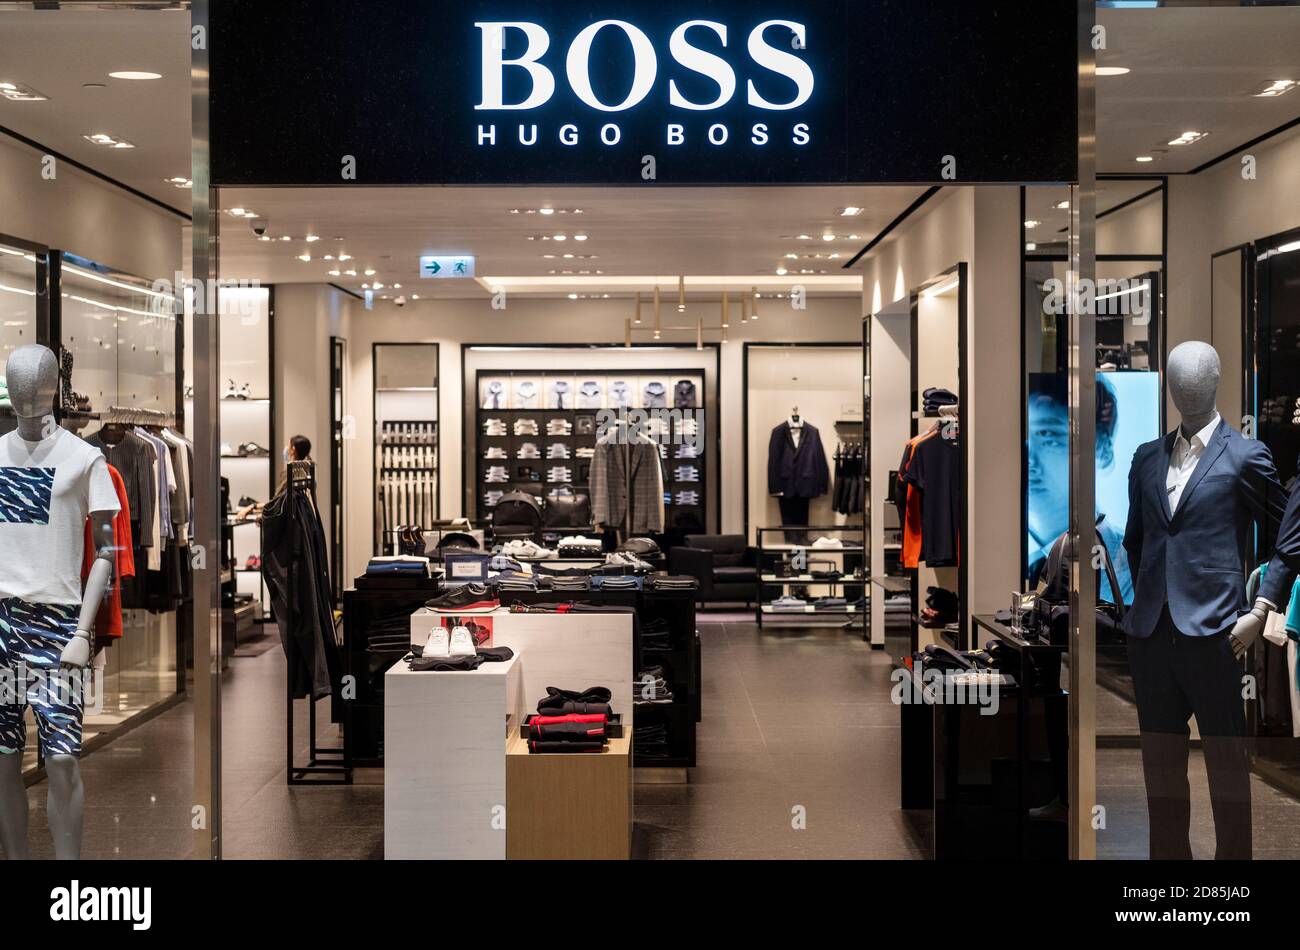 German clothing brand Hugo Boss logo seen in Hong Kong Stock Photo - Alamy